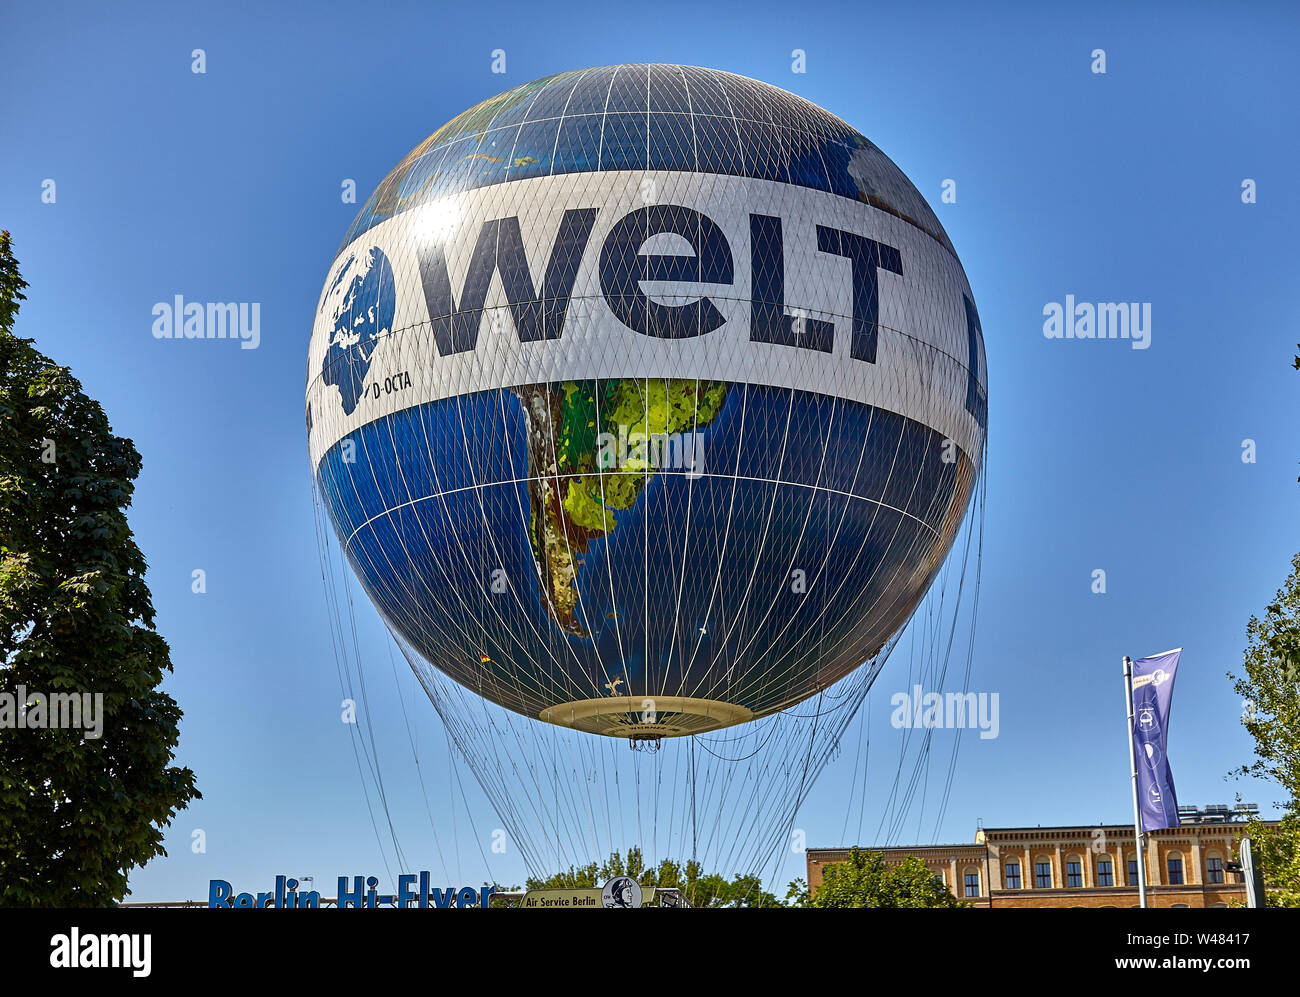 lokaal piano Zeker Berlin's Weltballon is among the world's biggest helium-filled balloons  Stock Photo - Alamy